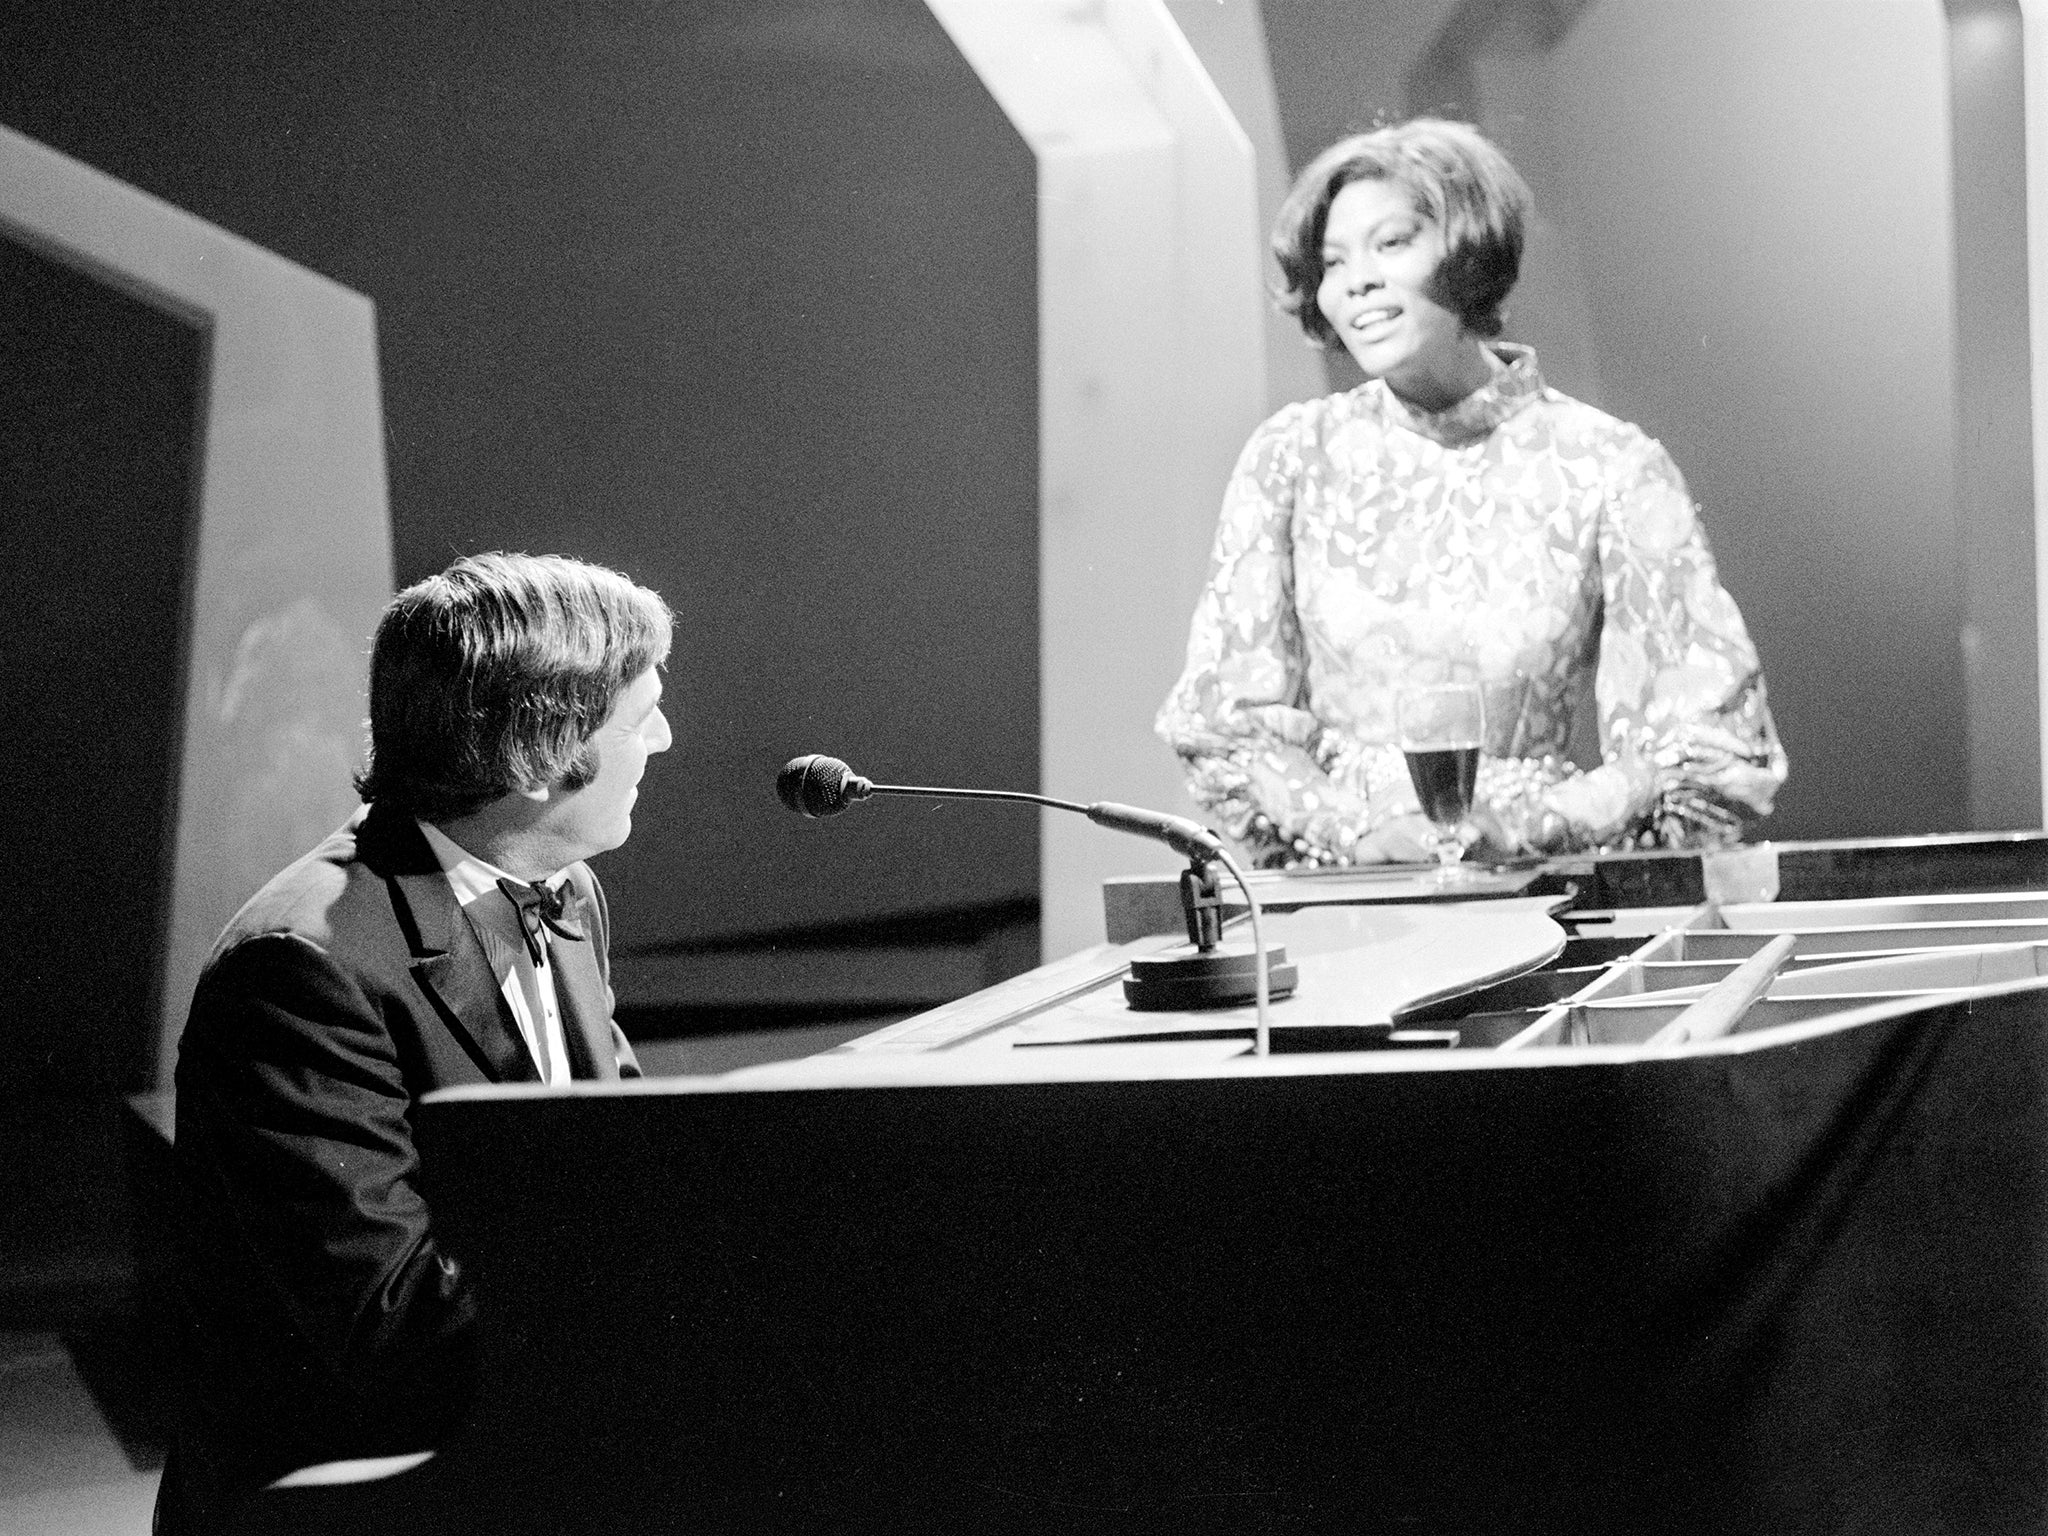 Burt Bacharach and Dionne Warwick in 1970